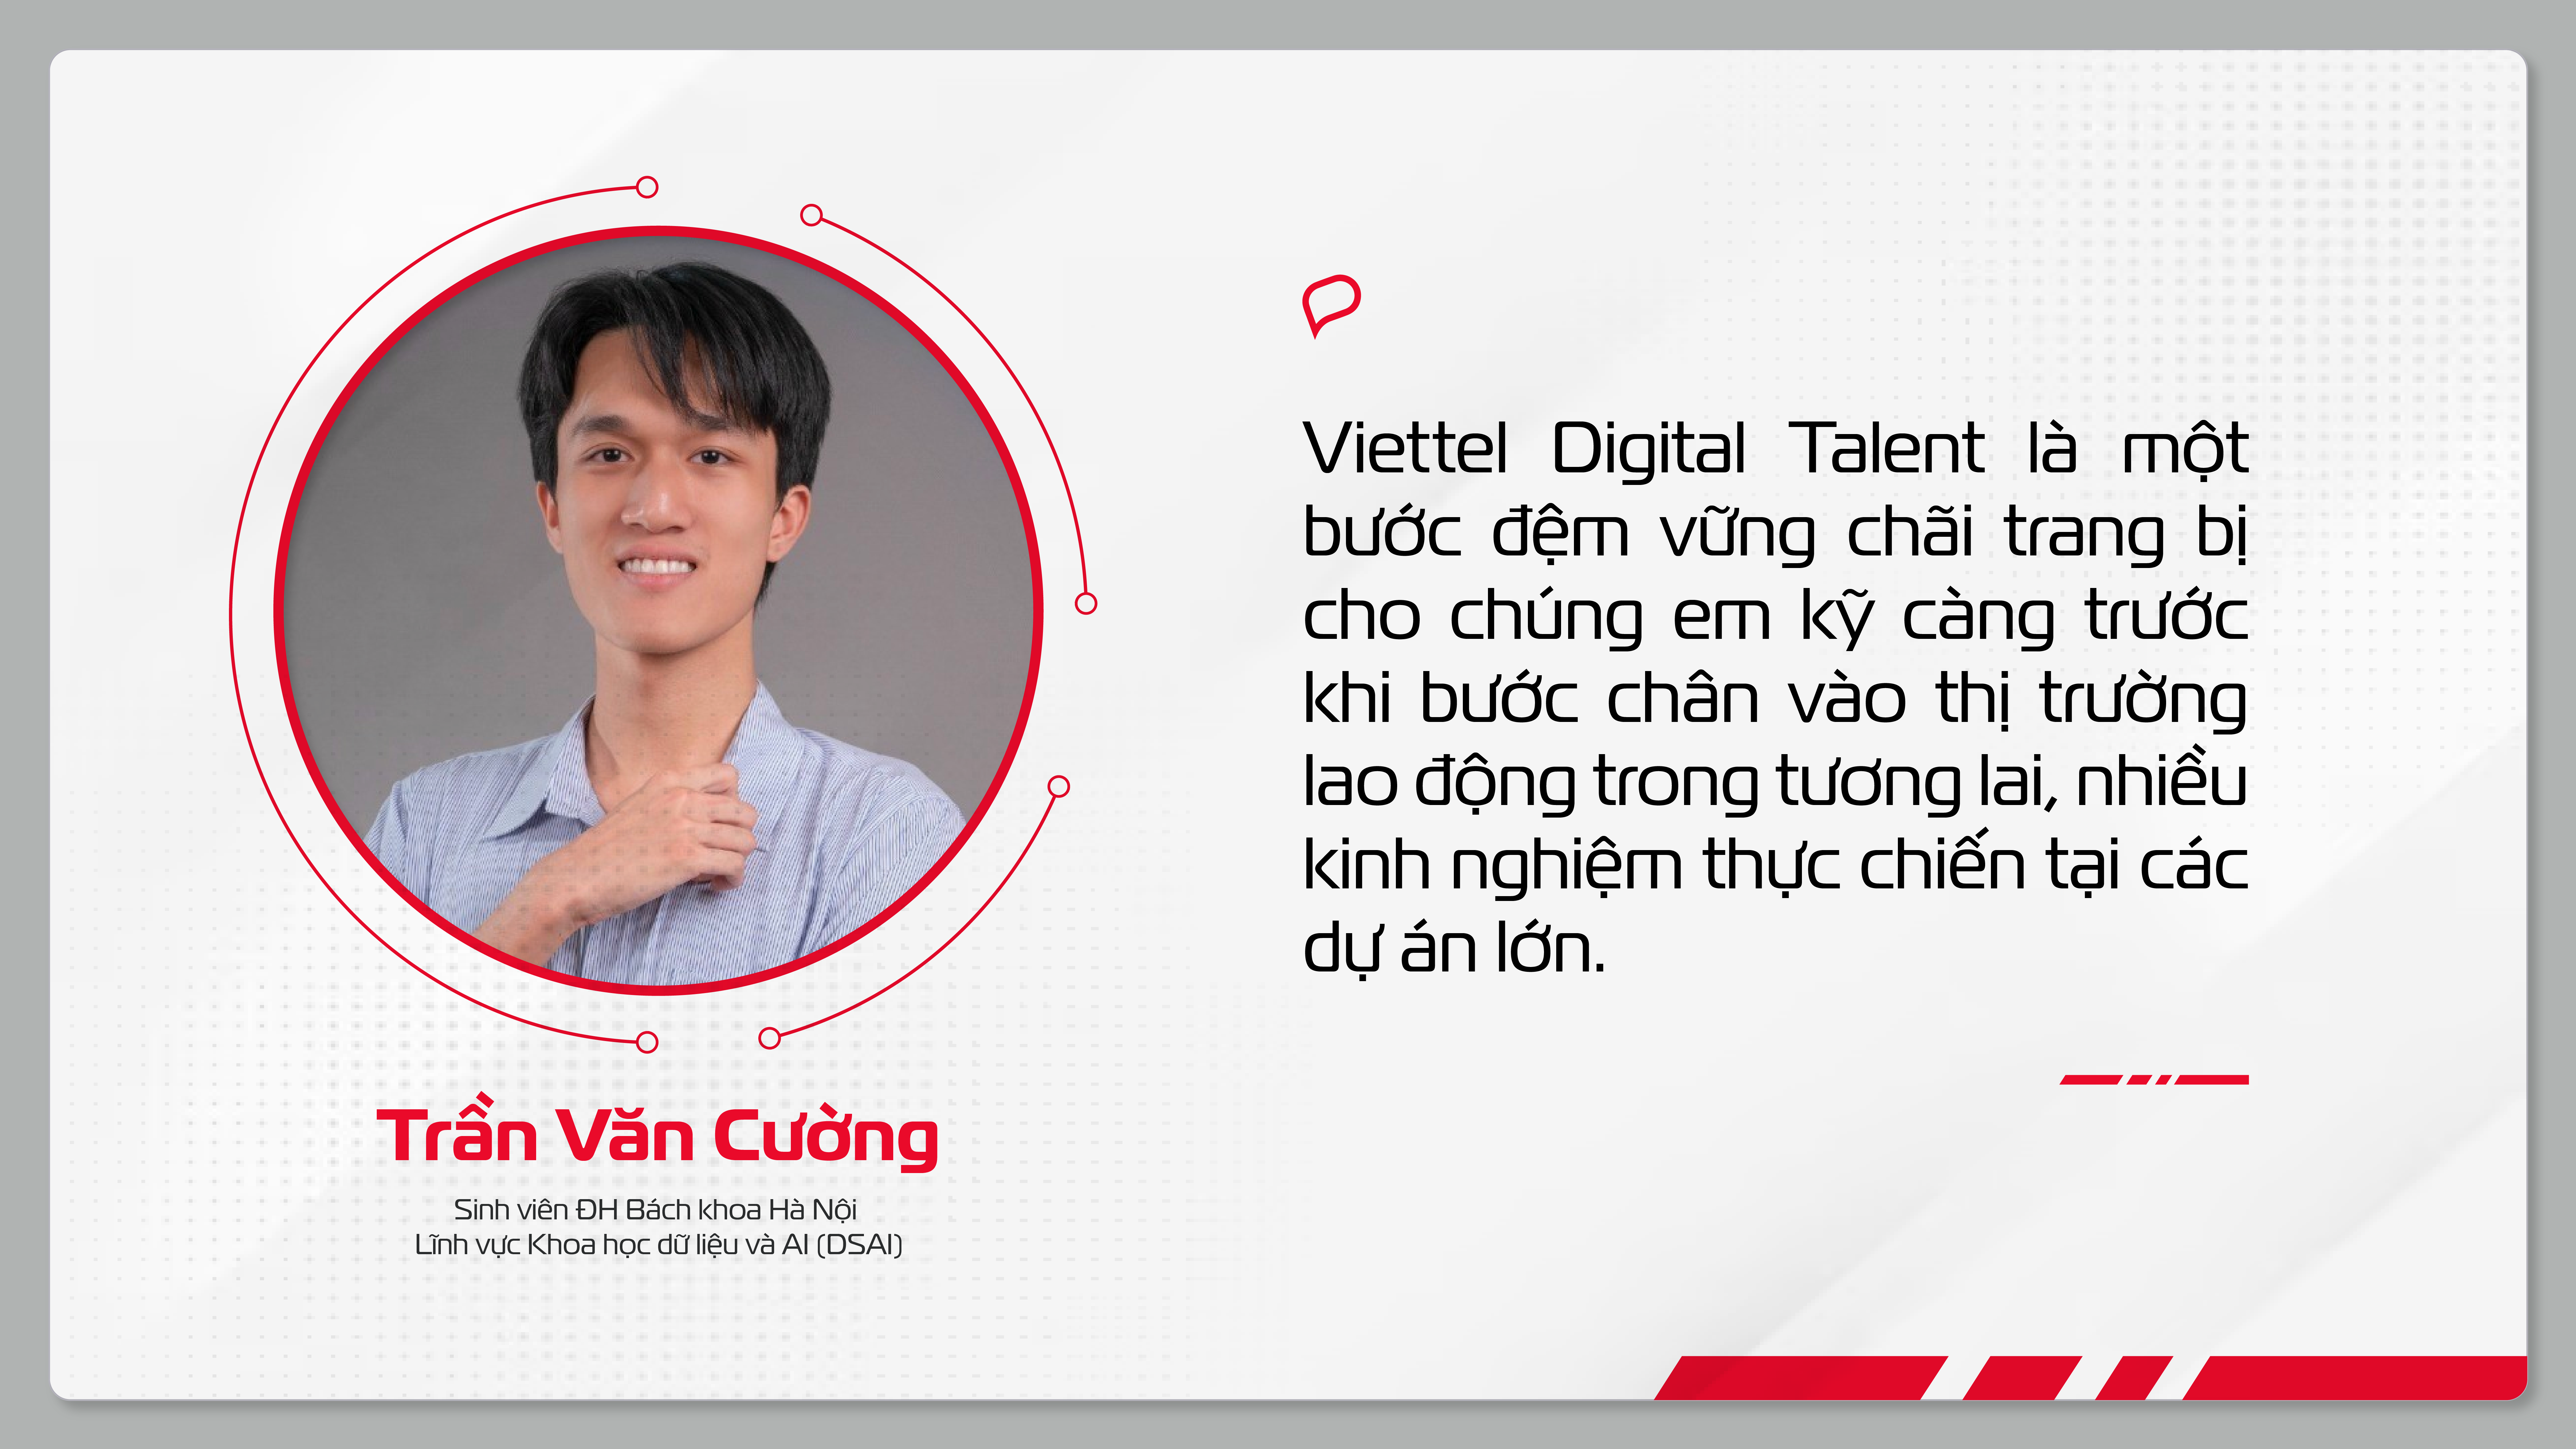 VDT - Tran Van Cuong-01-1